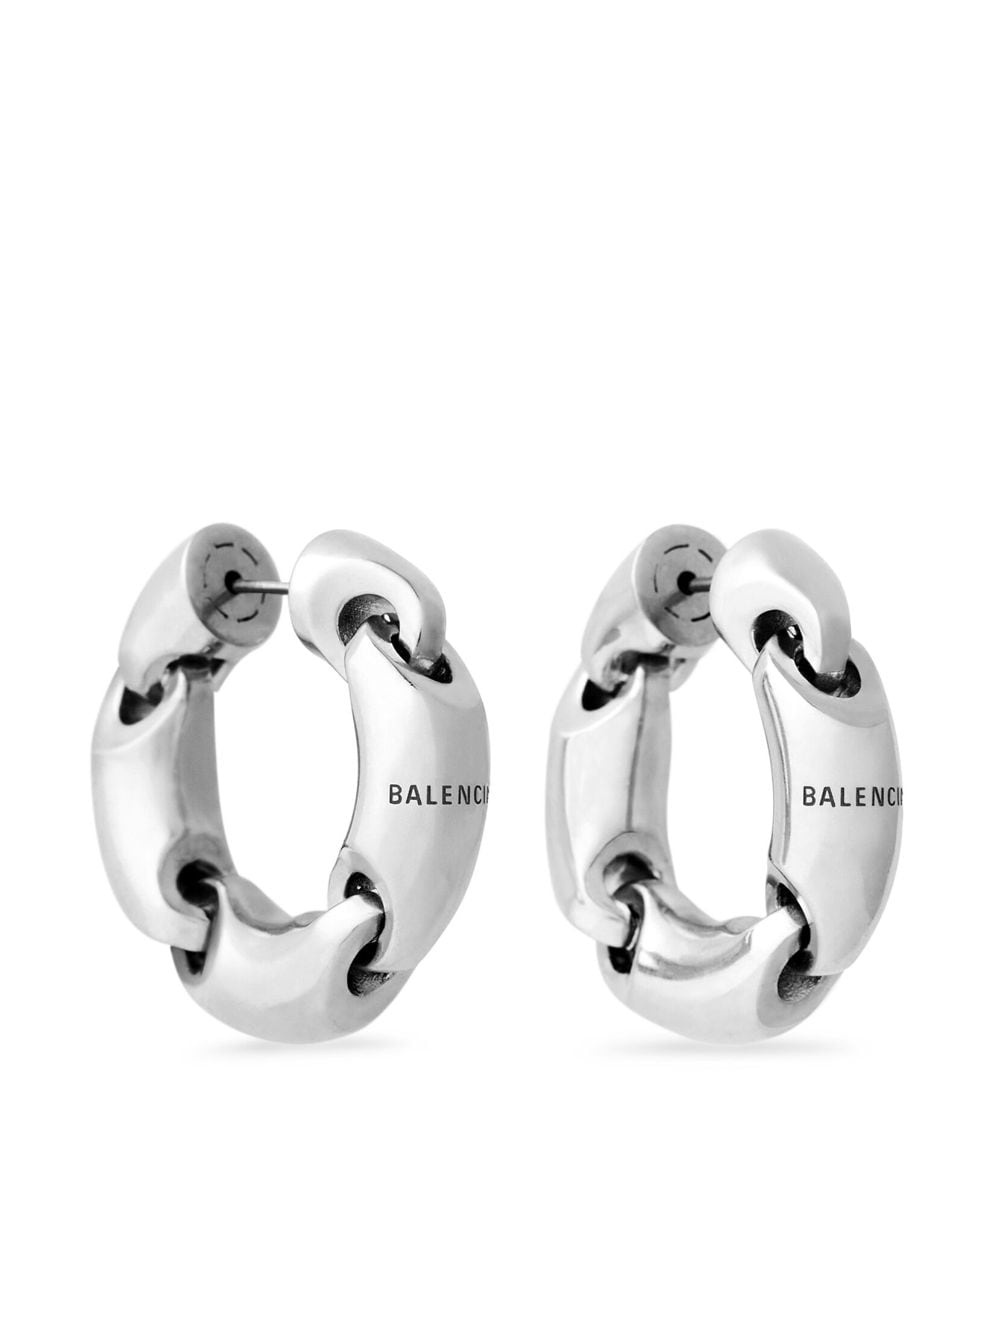 Solid 2.0 earrings - 1